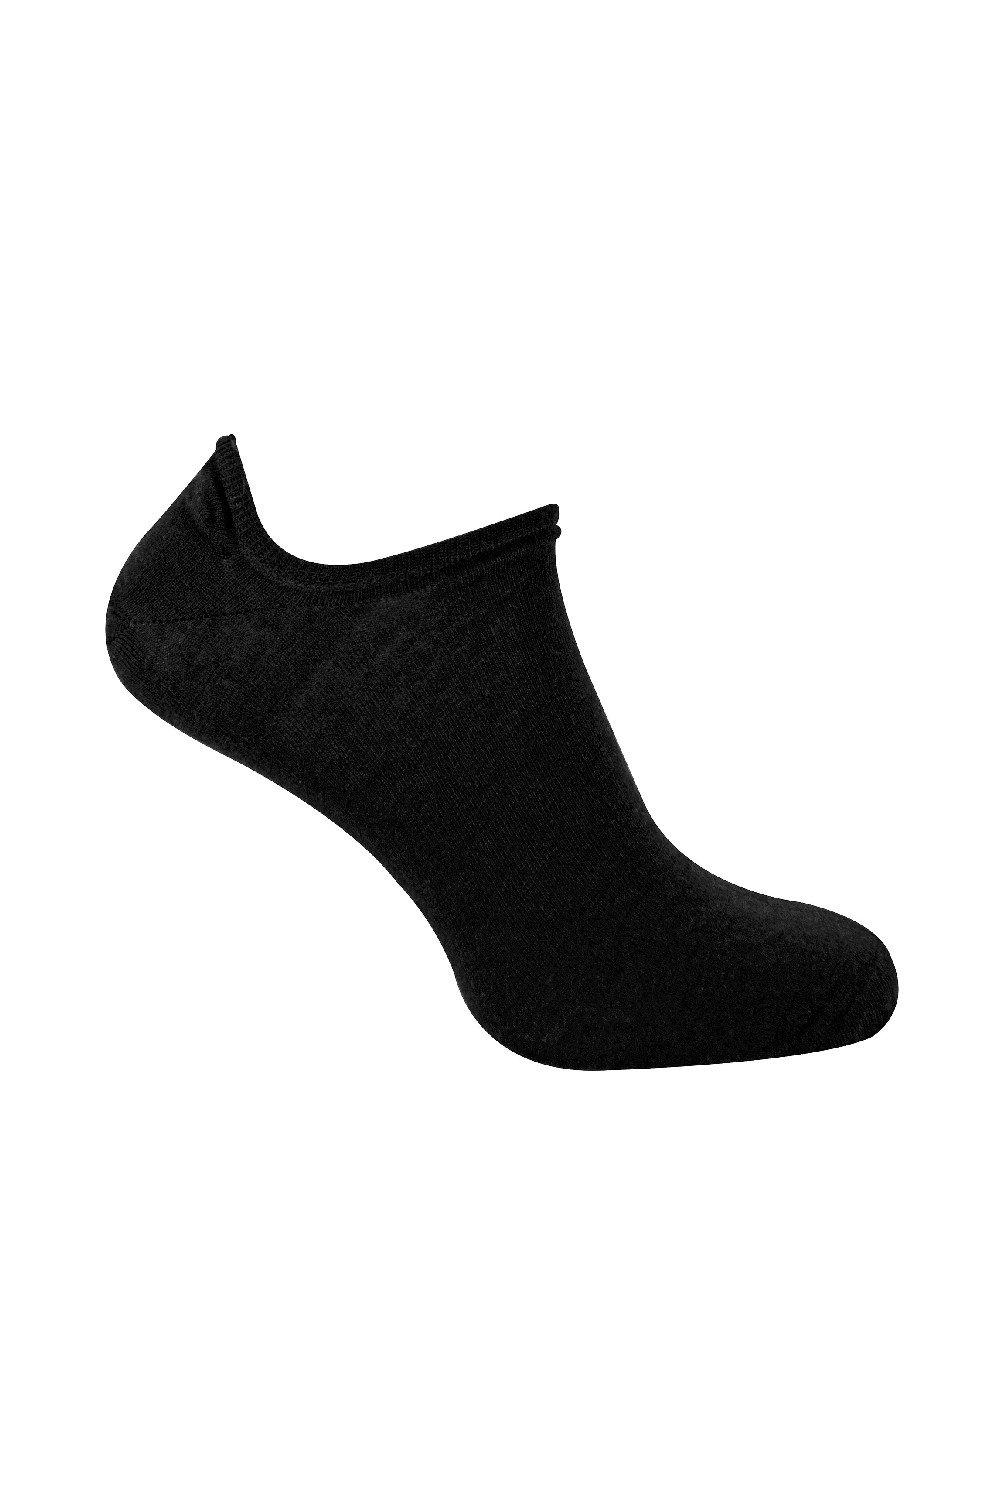 Merino Wool No Show Socks Invisible Low Cut Warm Footsies Socks